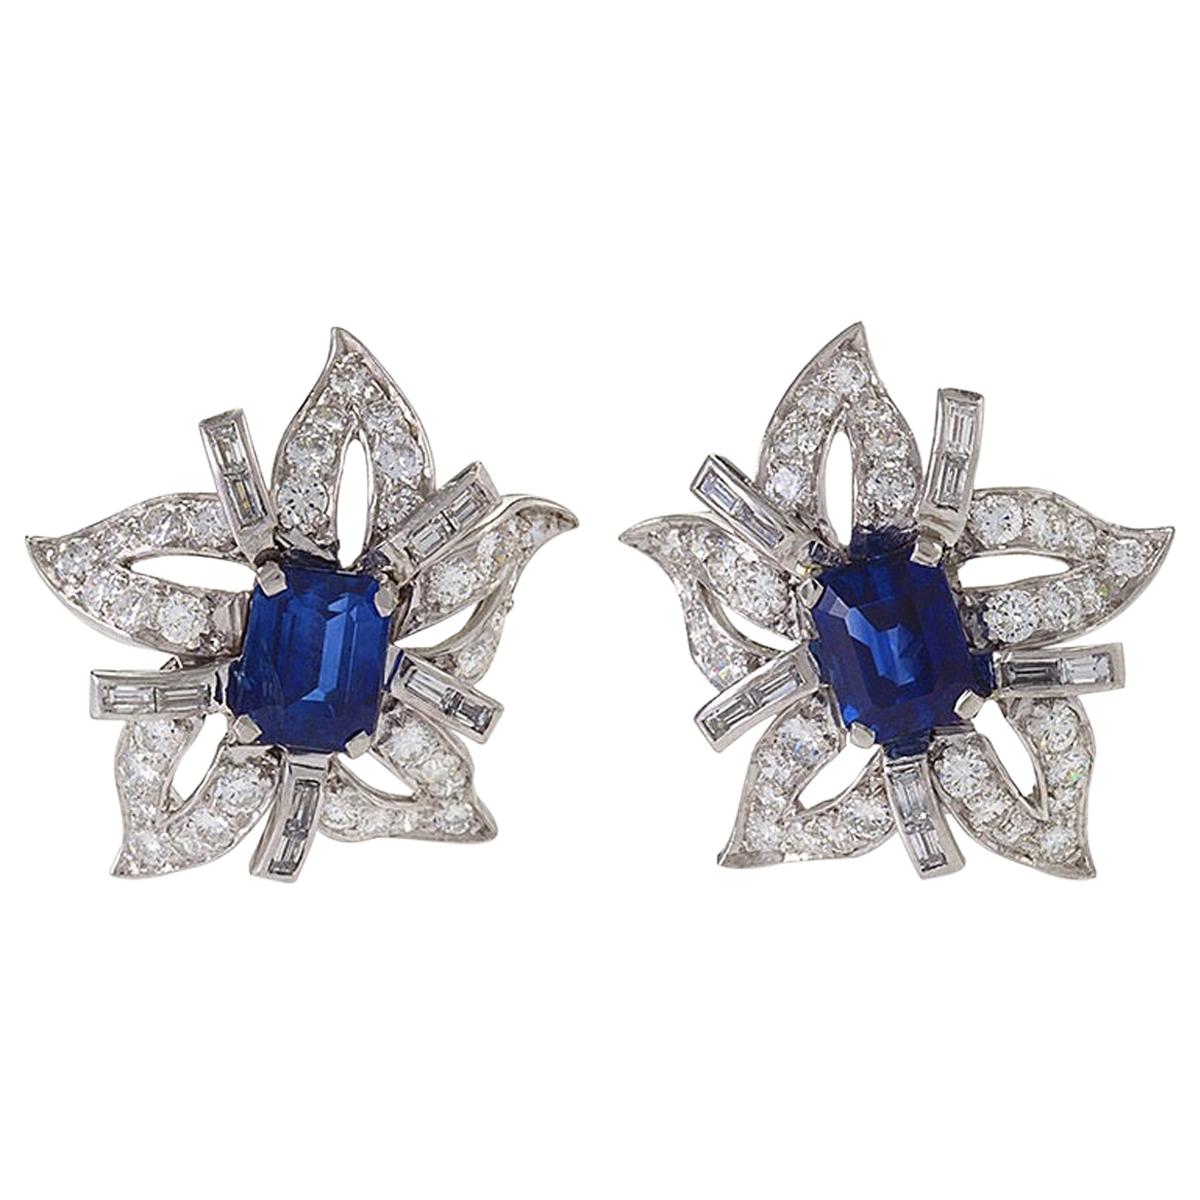 Platinum, Sapphire and Diamond Flower Earrings